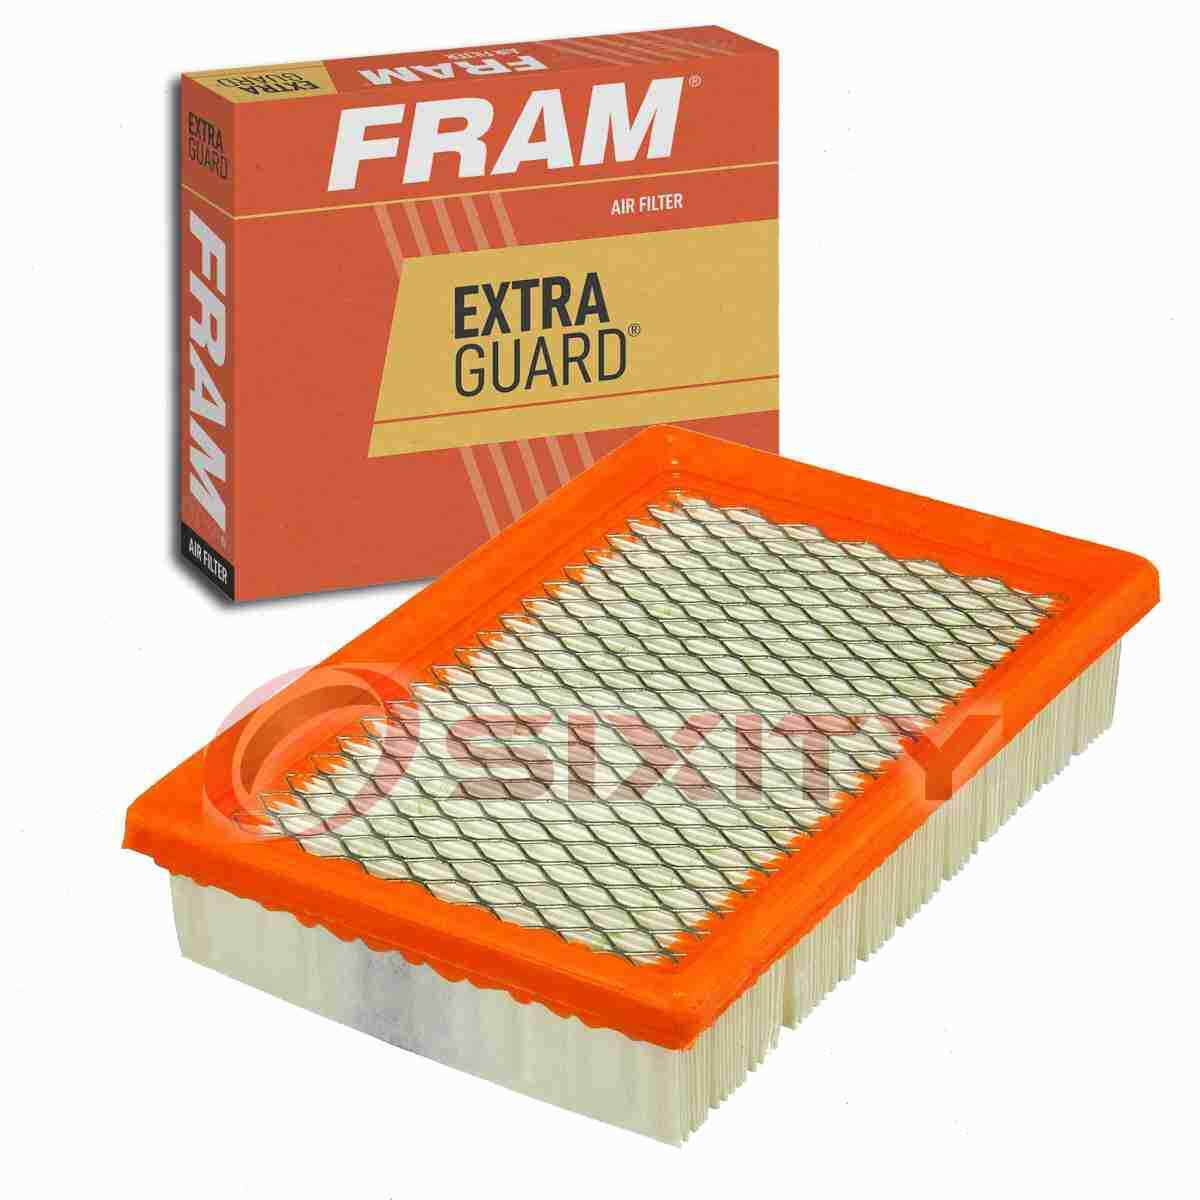 FRAM Extra Guard Air Filter for 1981-1987 Dodge Omni Intake Inlet Manifold bi